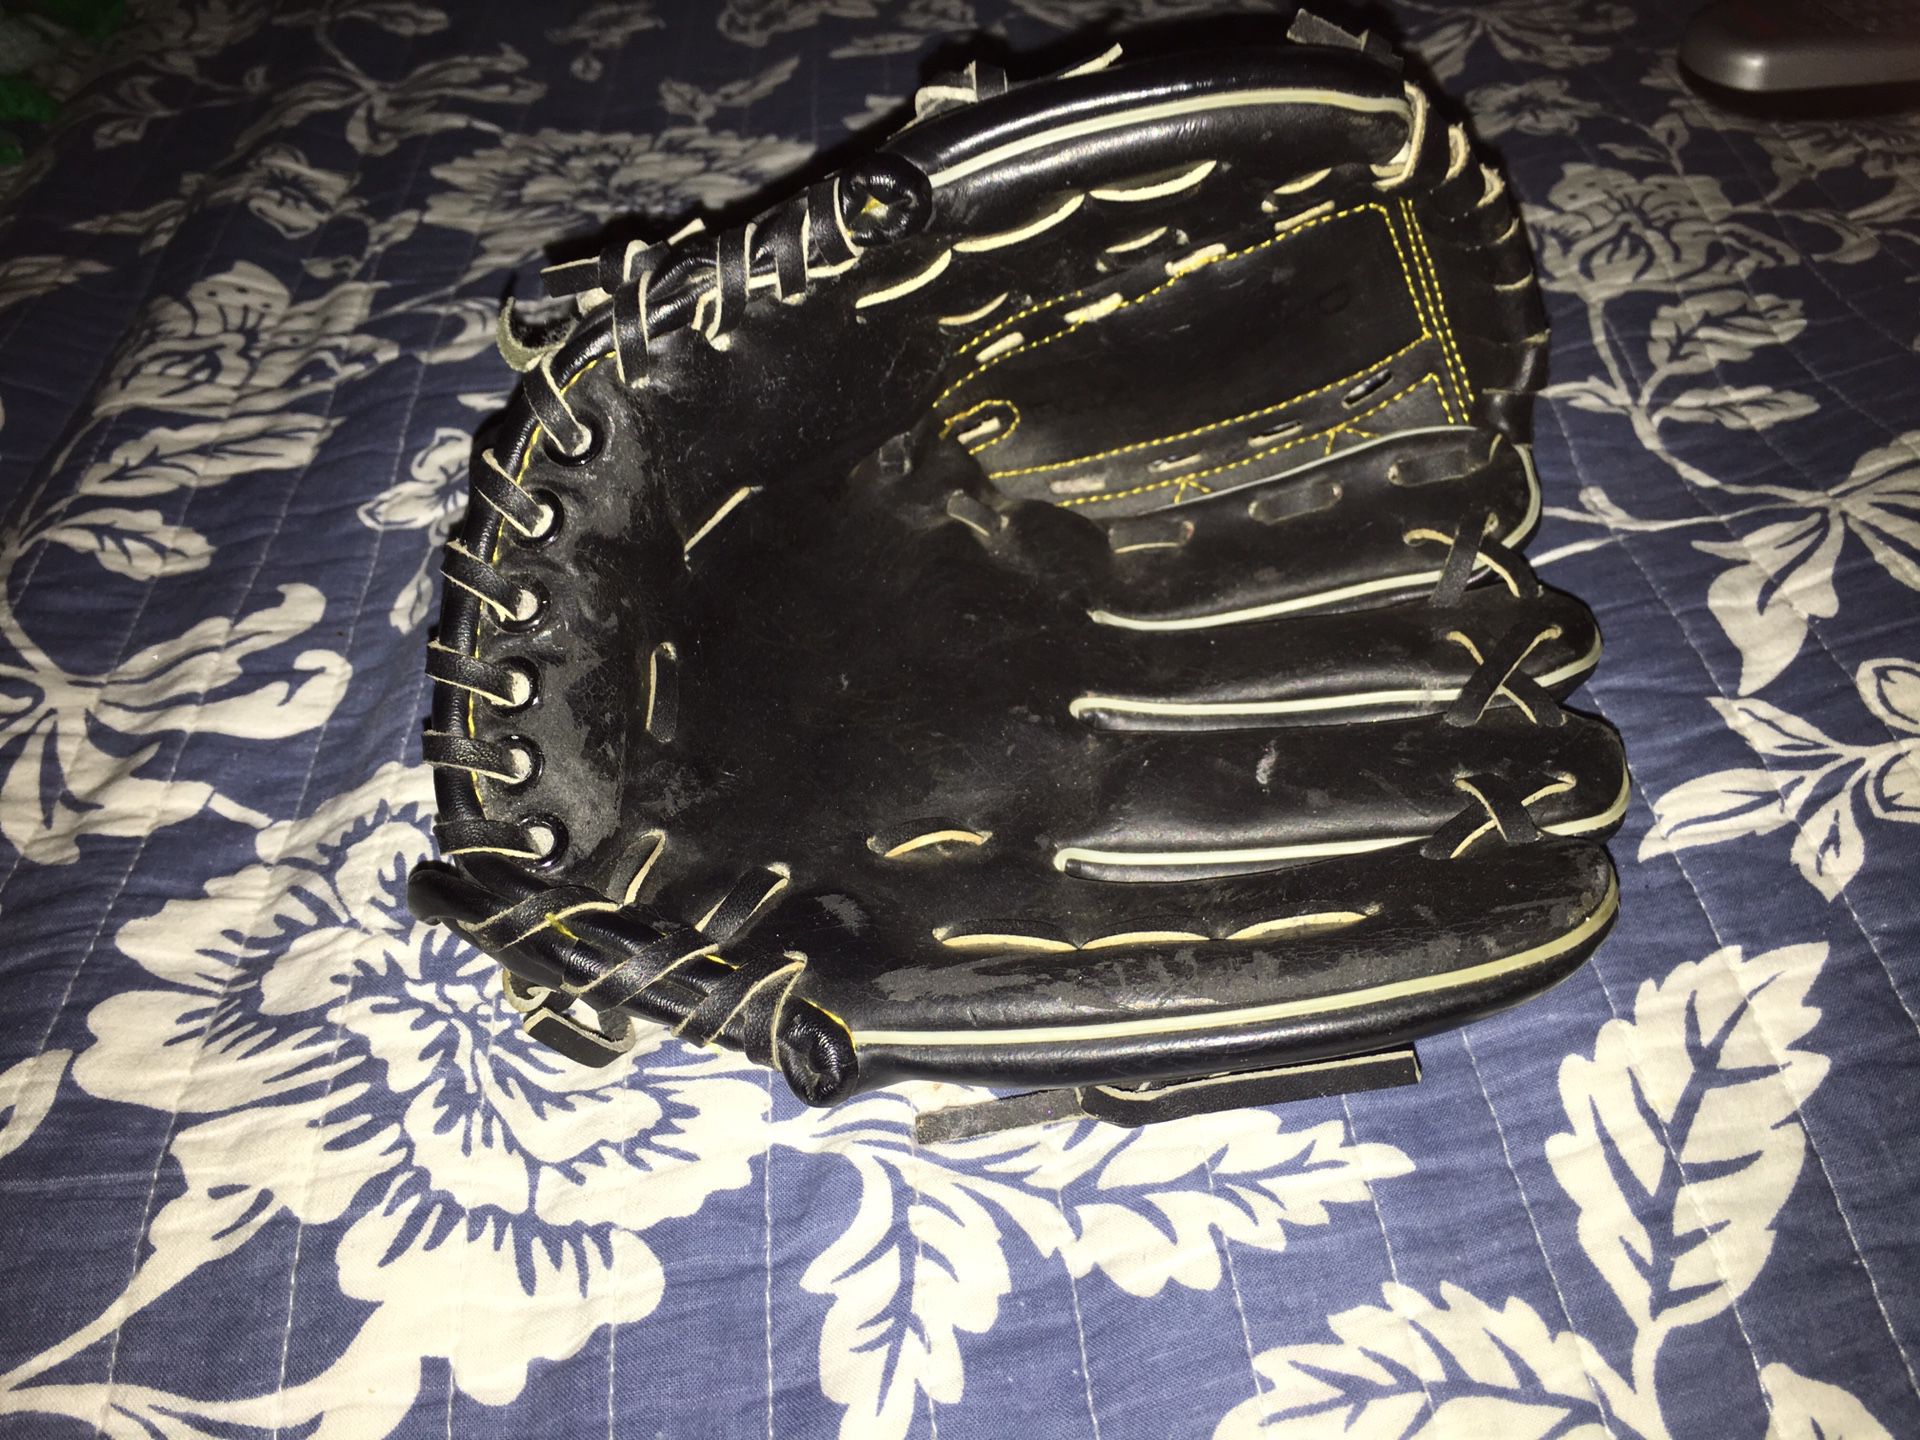 Child’s baseball glove